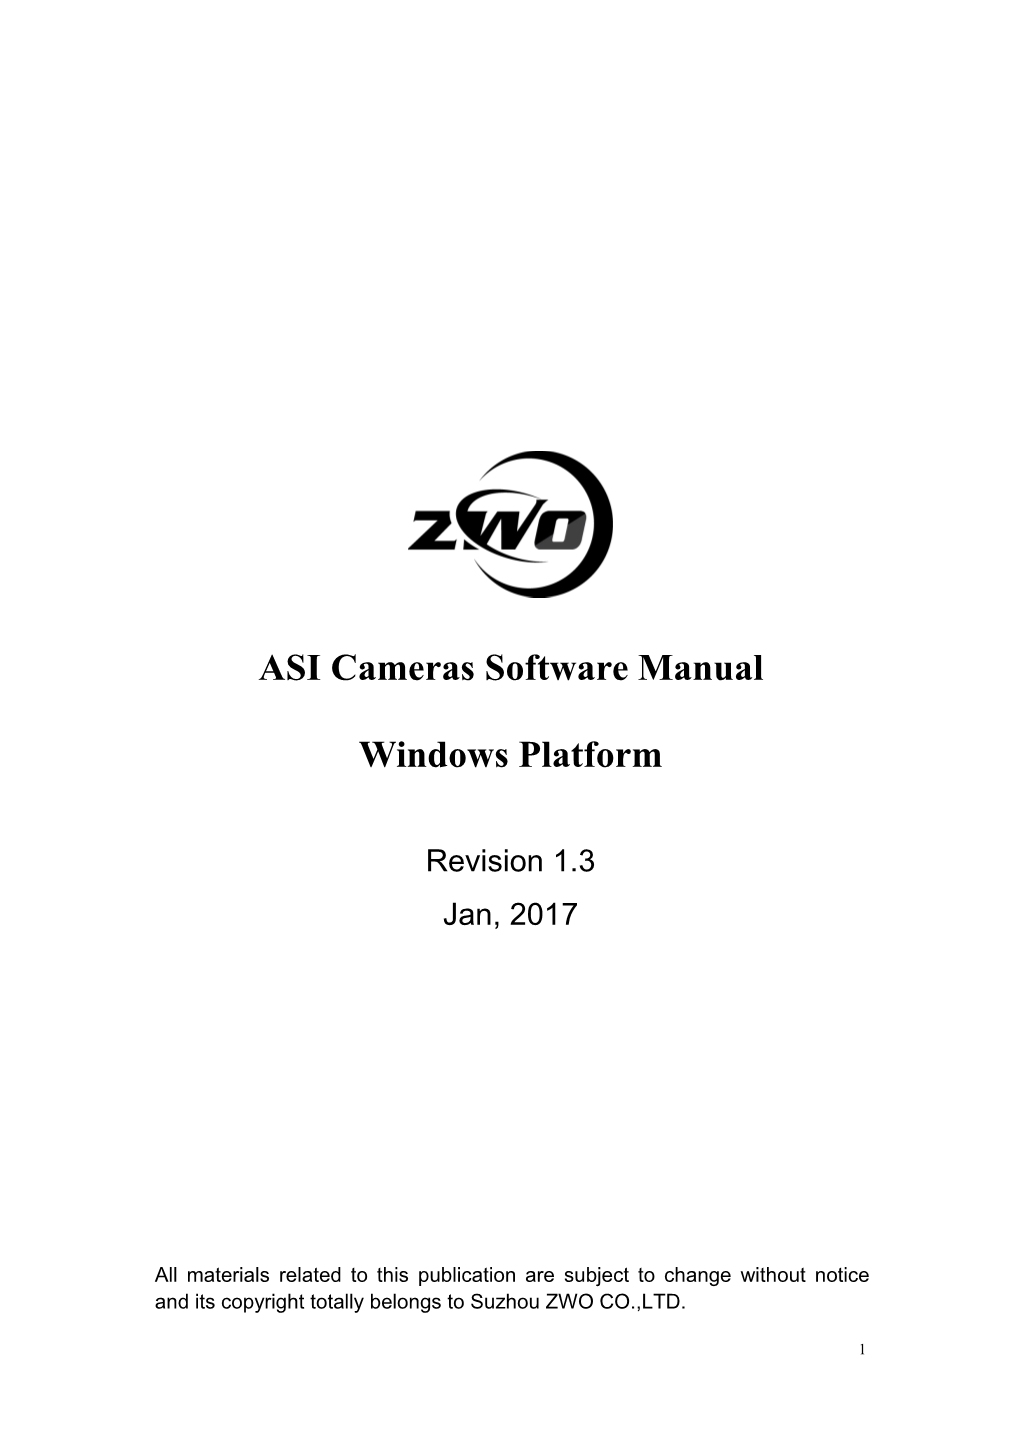 ASI Cameras Software Manual Windows Platform